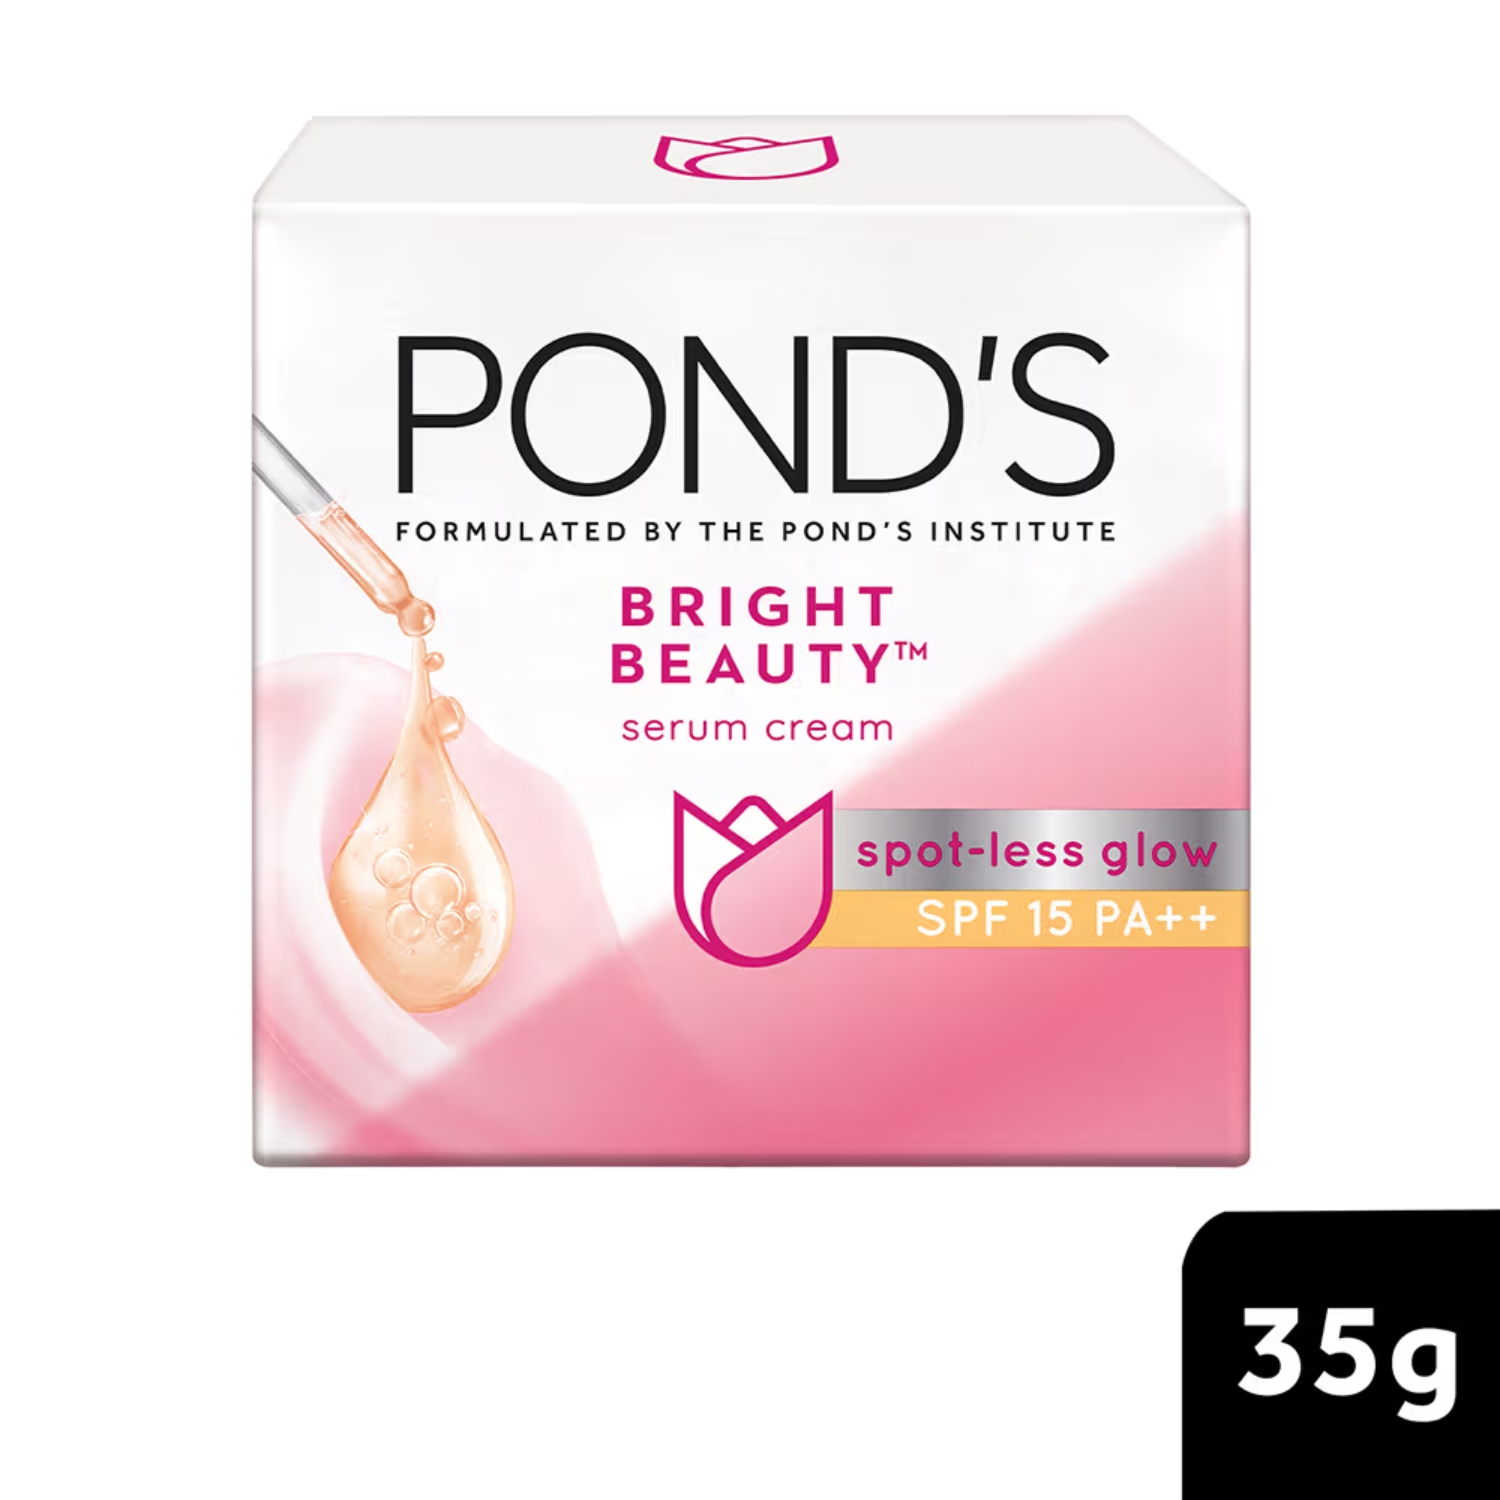 Pond's | Pond's Bright Beauty SPF 15 PA++ Spot-Less Glow Serum Cream (35g)